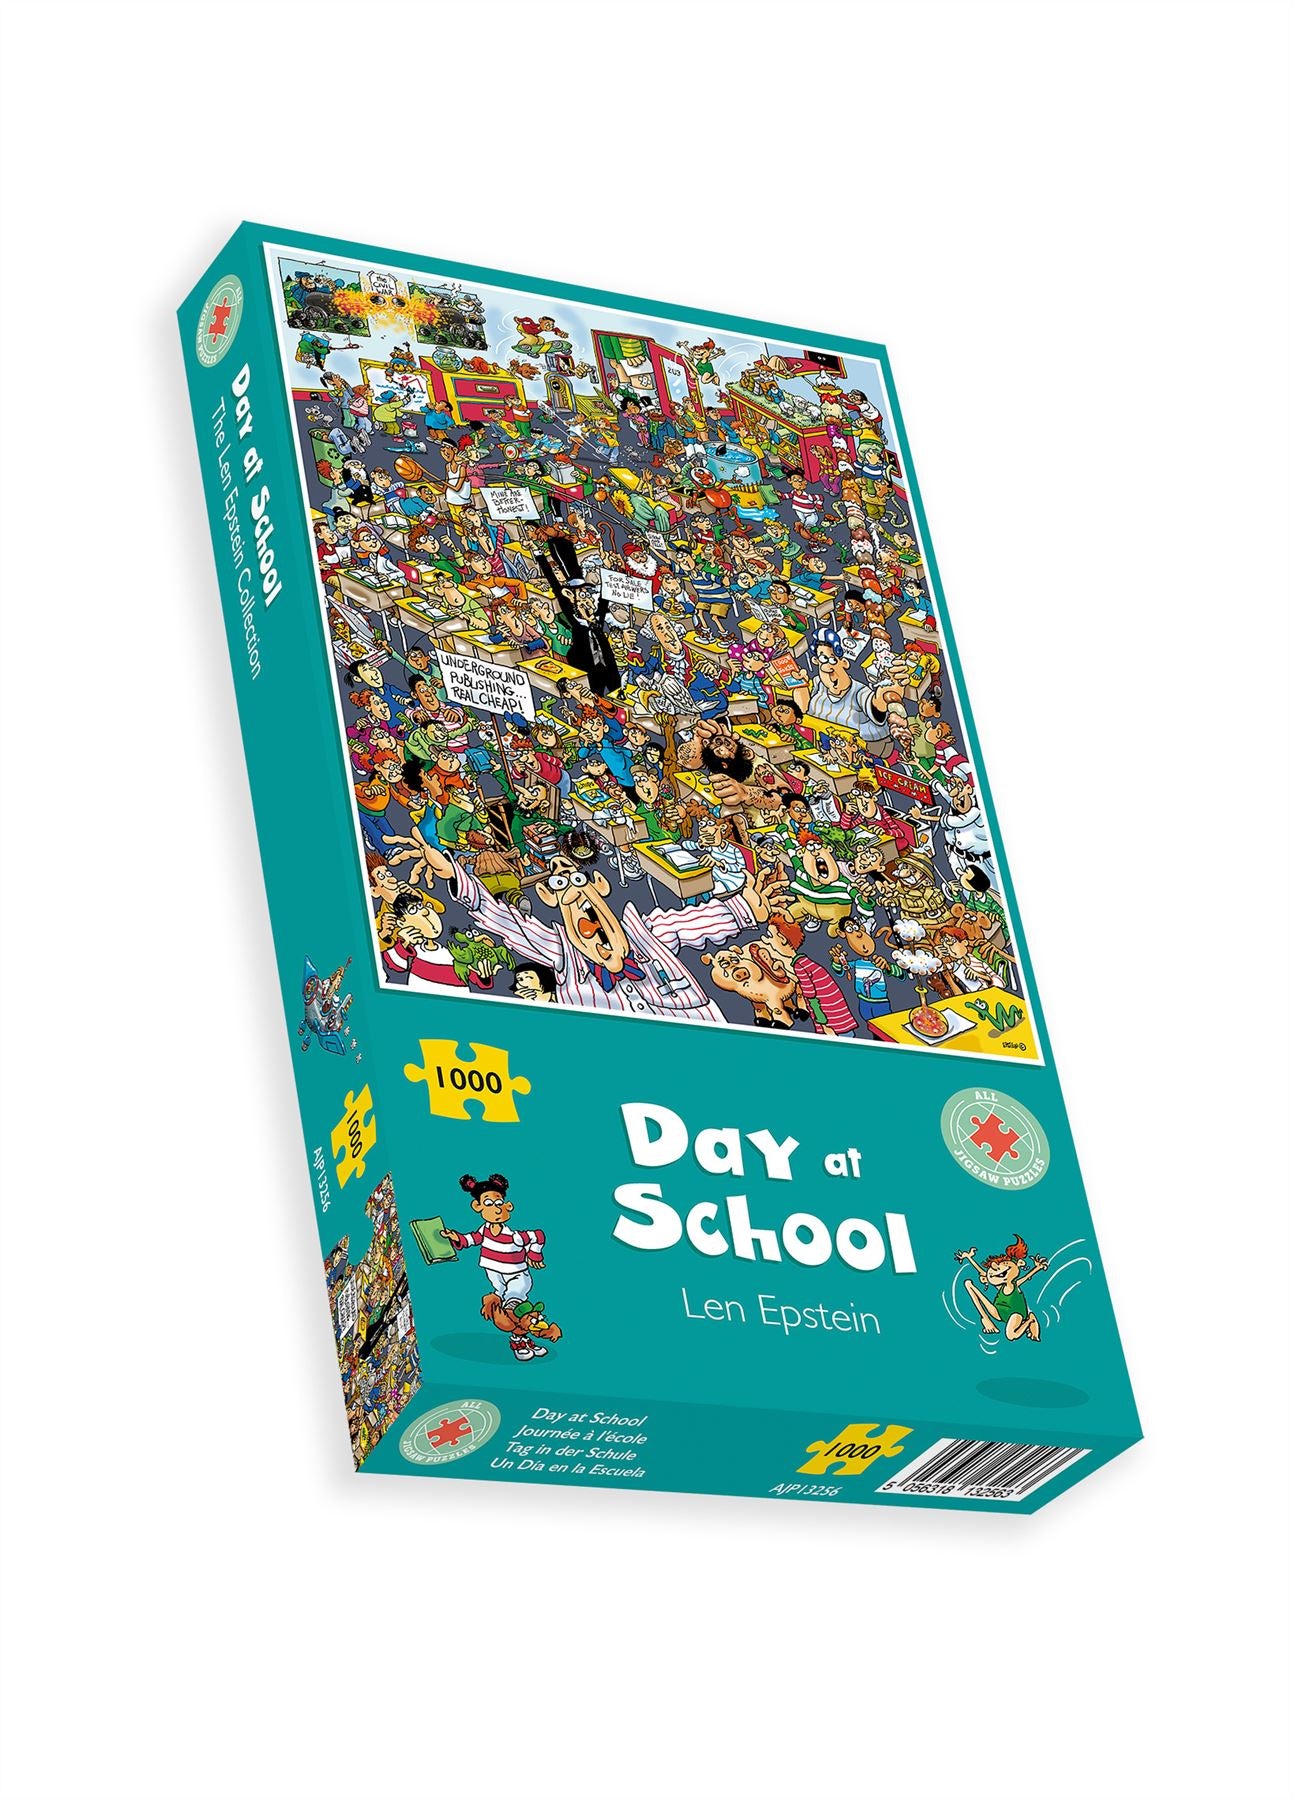 Day at School - Len Epstein 1000 Piece Jigsaw Puzzle